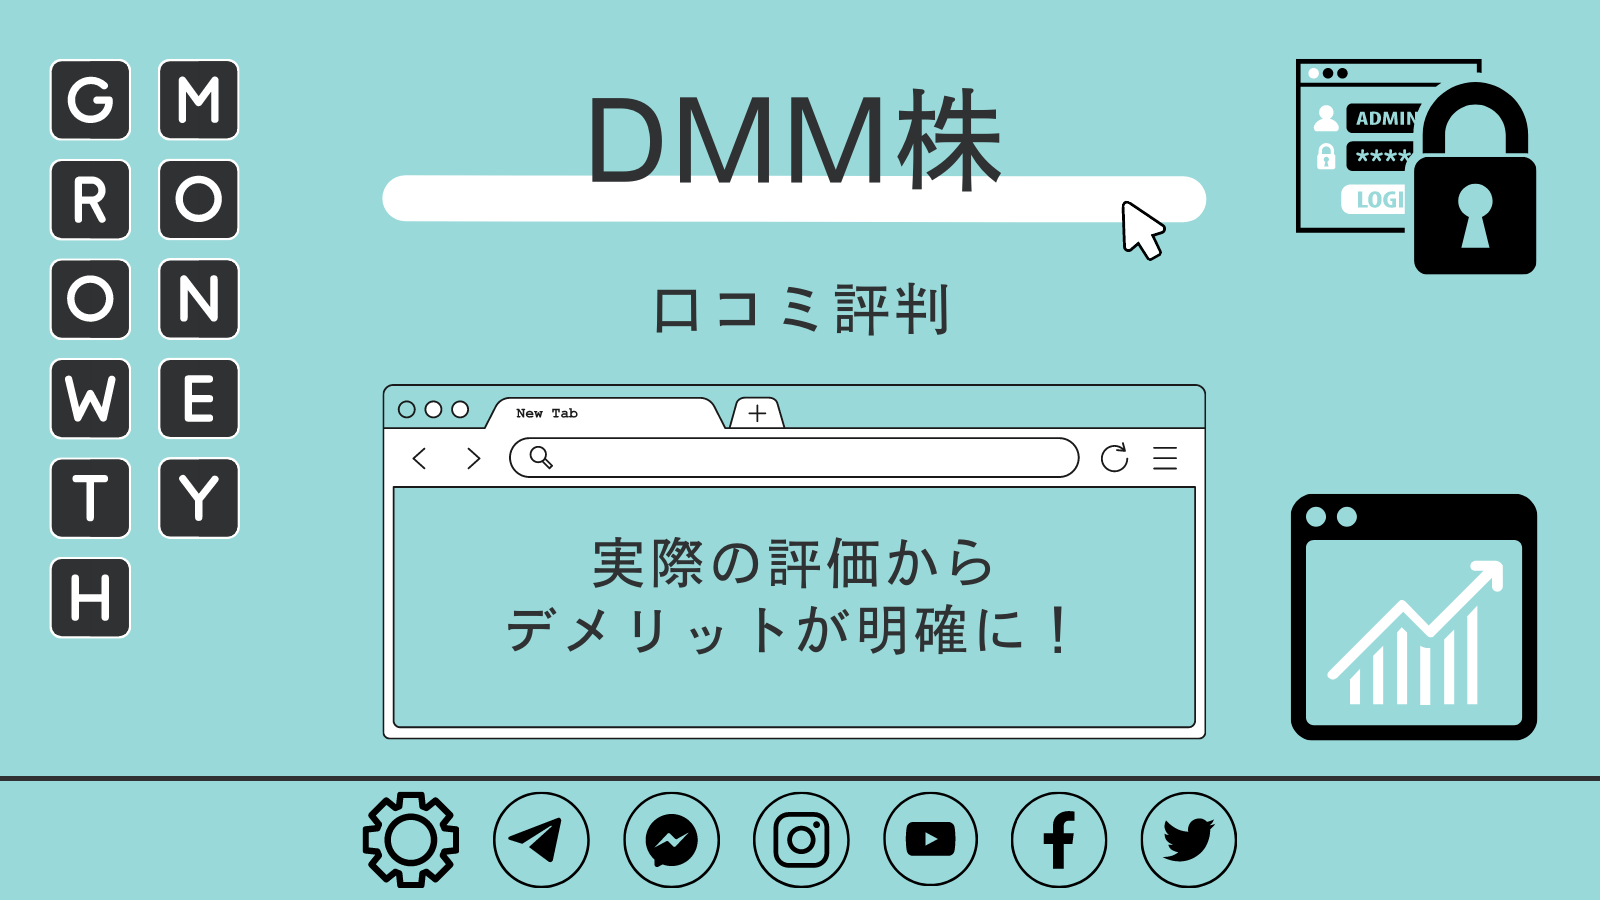 DMM株の口コミ評判